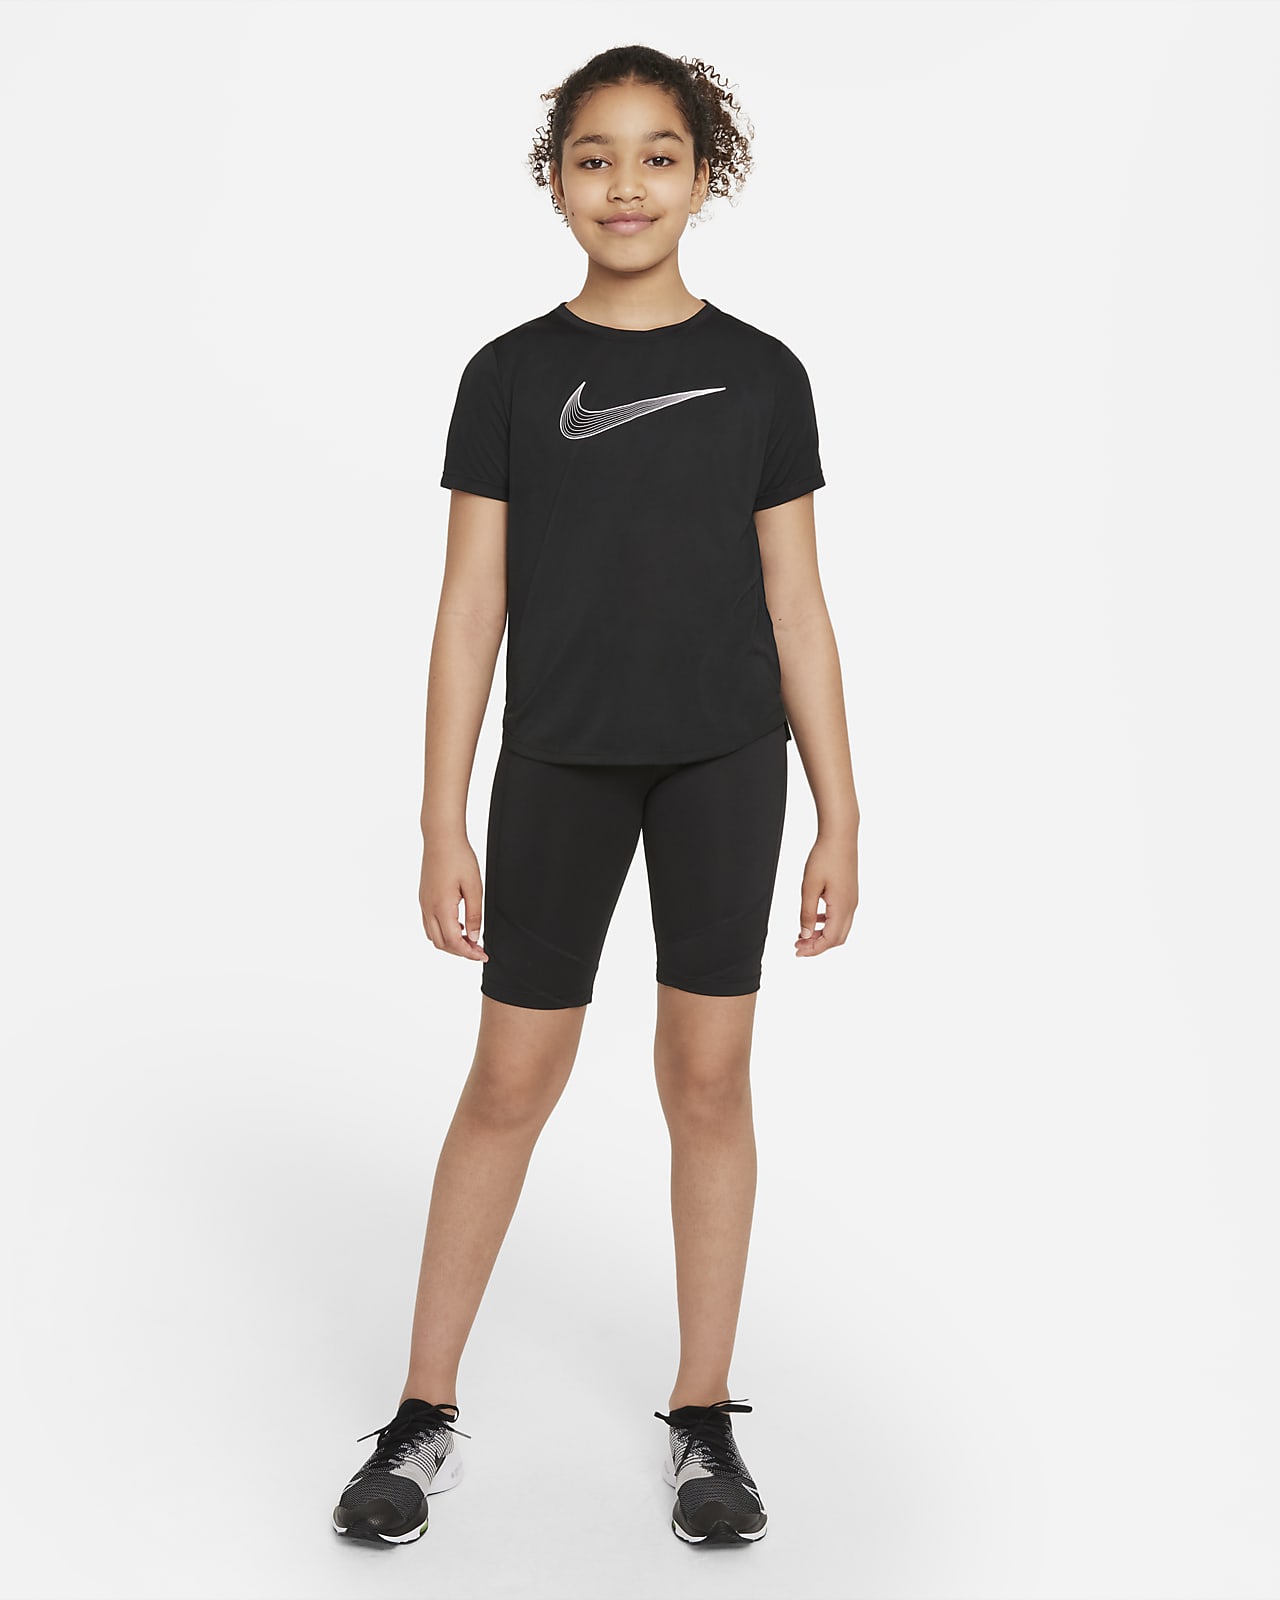 Girls 7-16 Nike Dri-FIT Sprinter Running Shorts